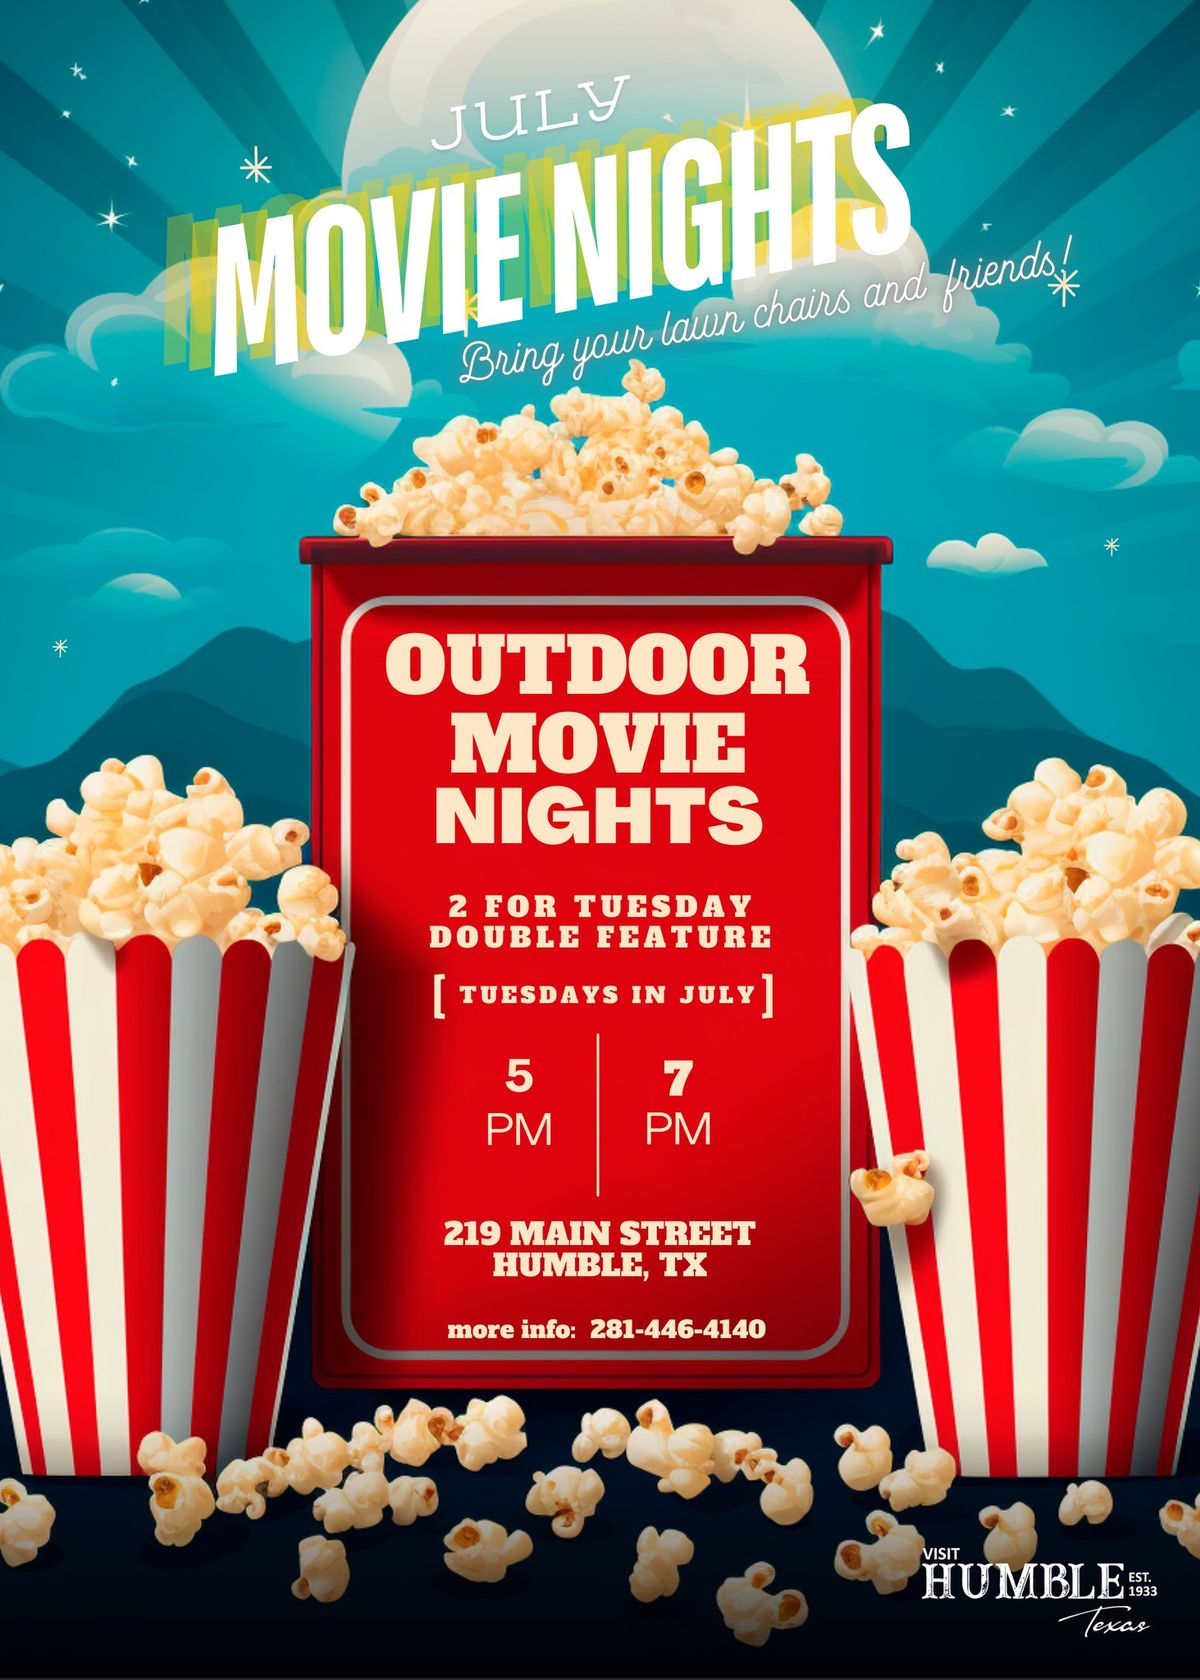 July Movie Nights on Main Street